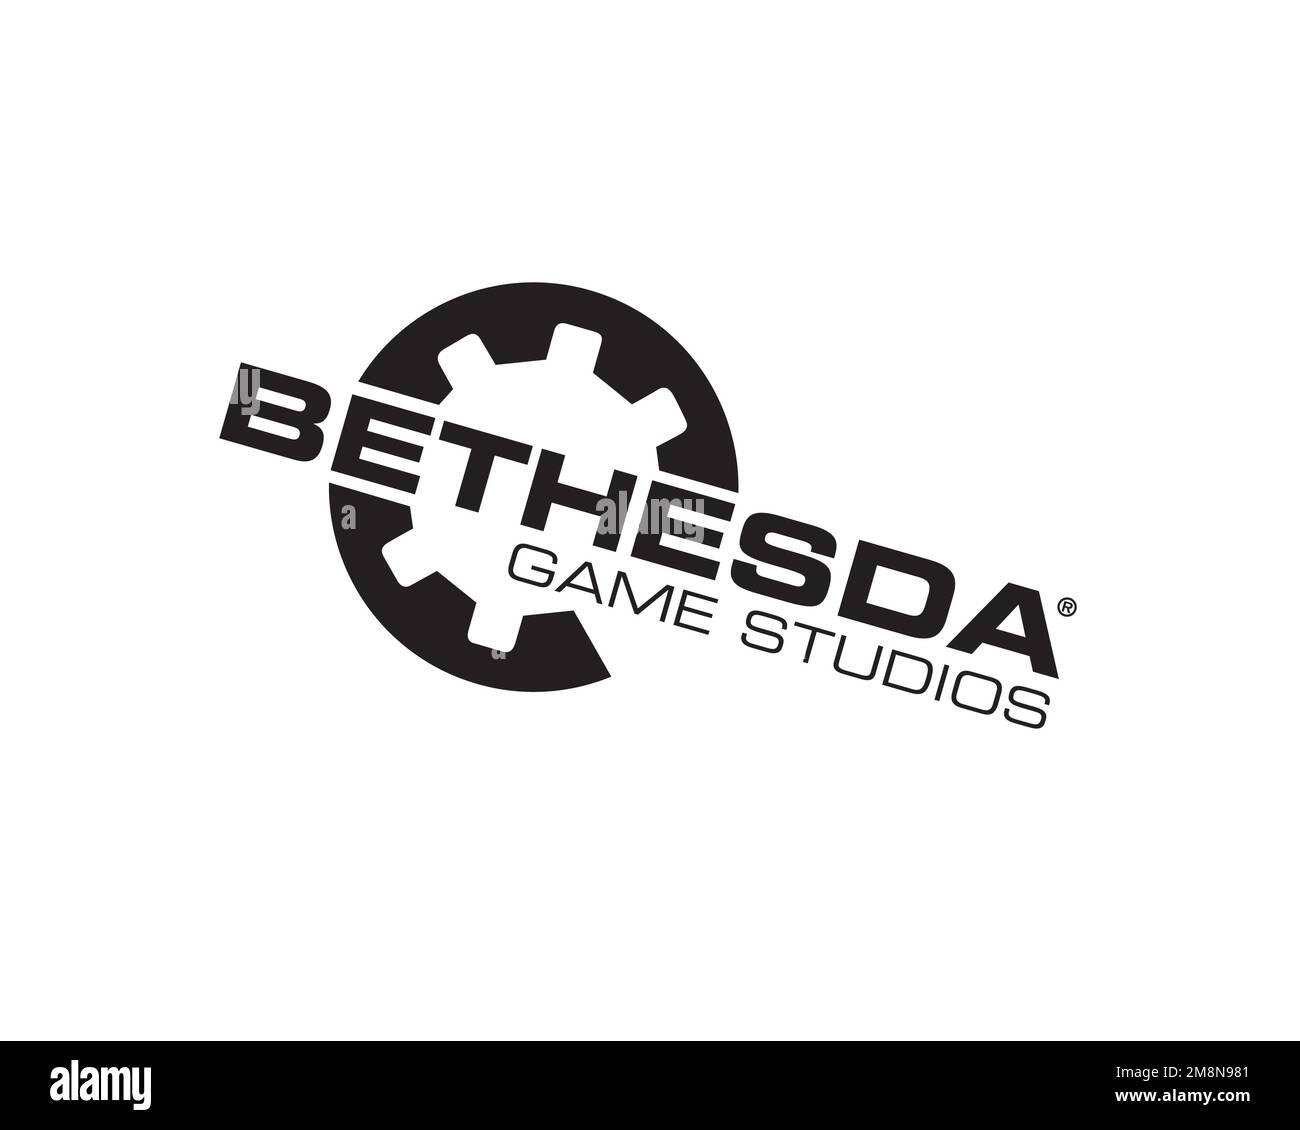 Bethesda Game Studios Dallas, logo ruotato, sfondo bianco B Foto Stock